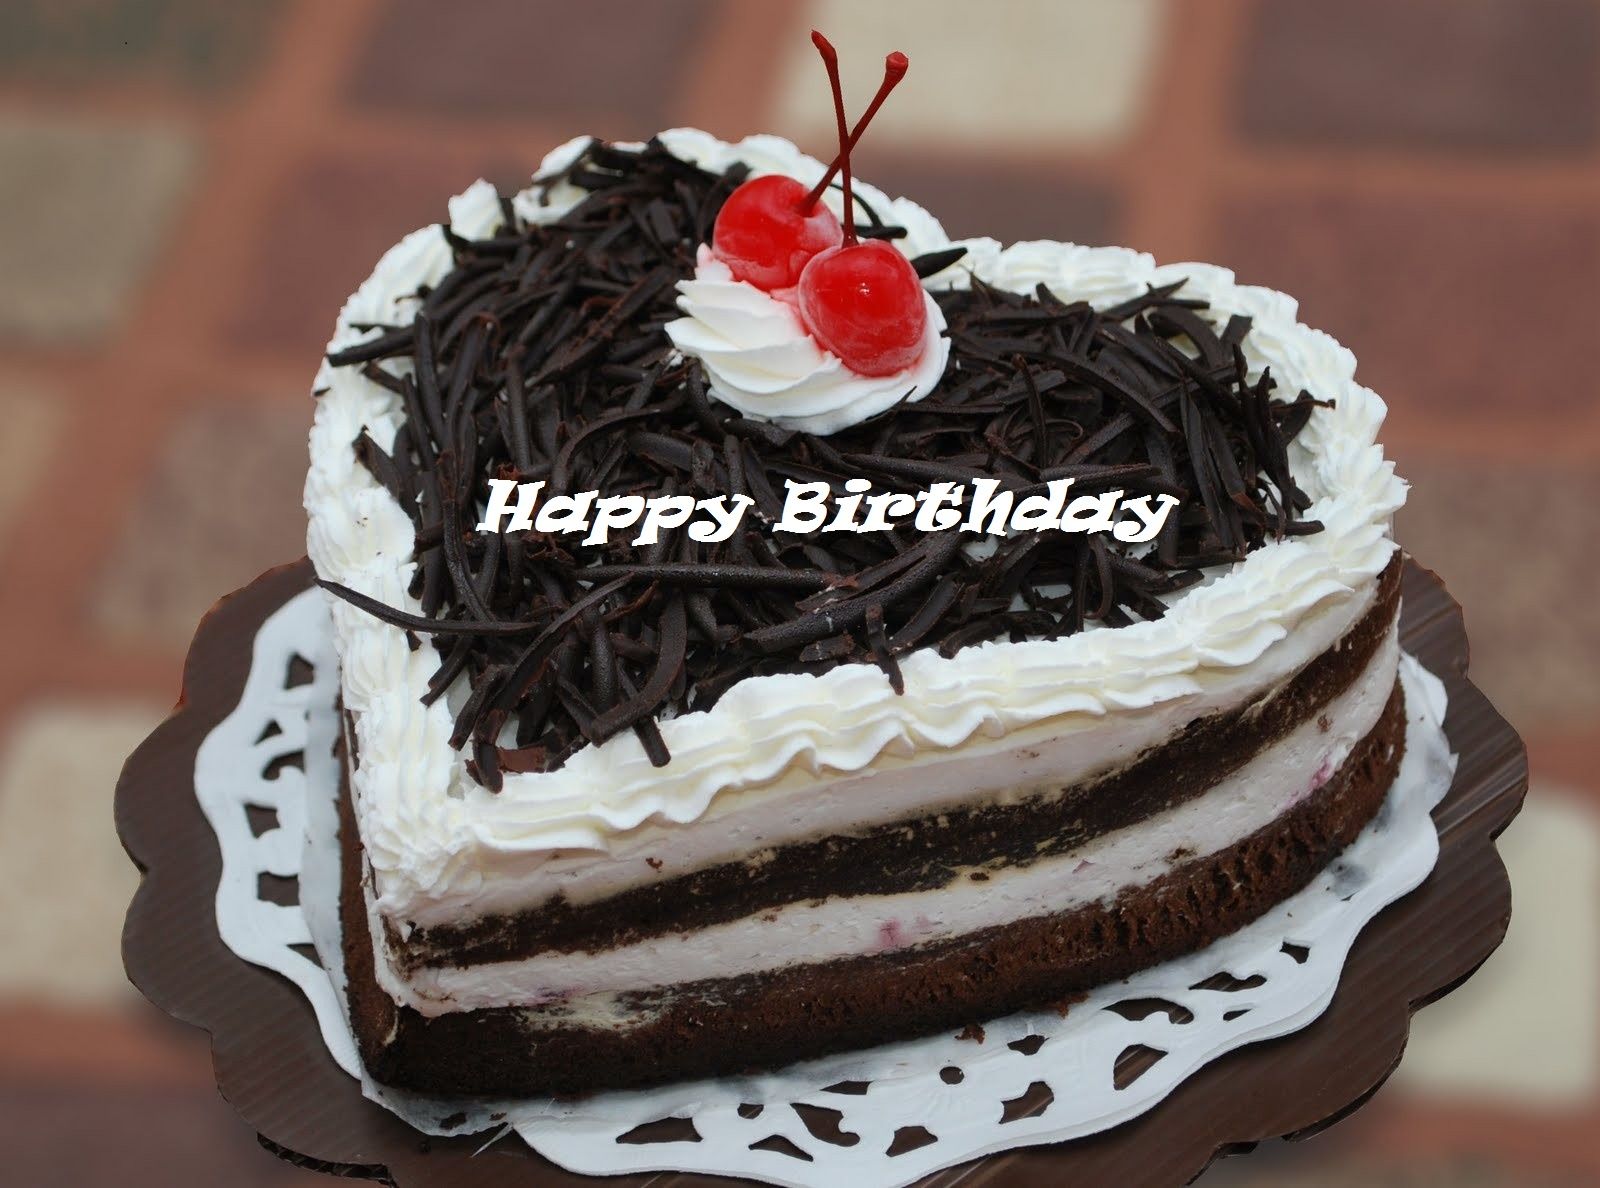 Happy Birthday Cake Pic Download - 1600x1188 Wallpaper 